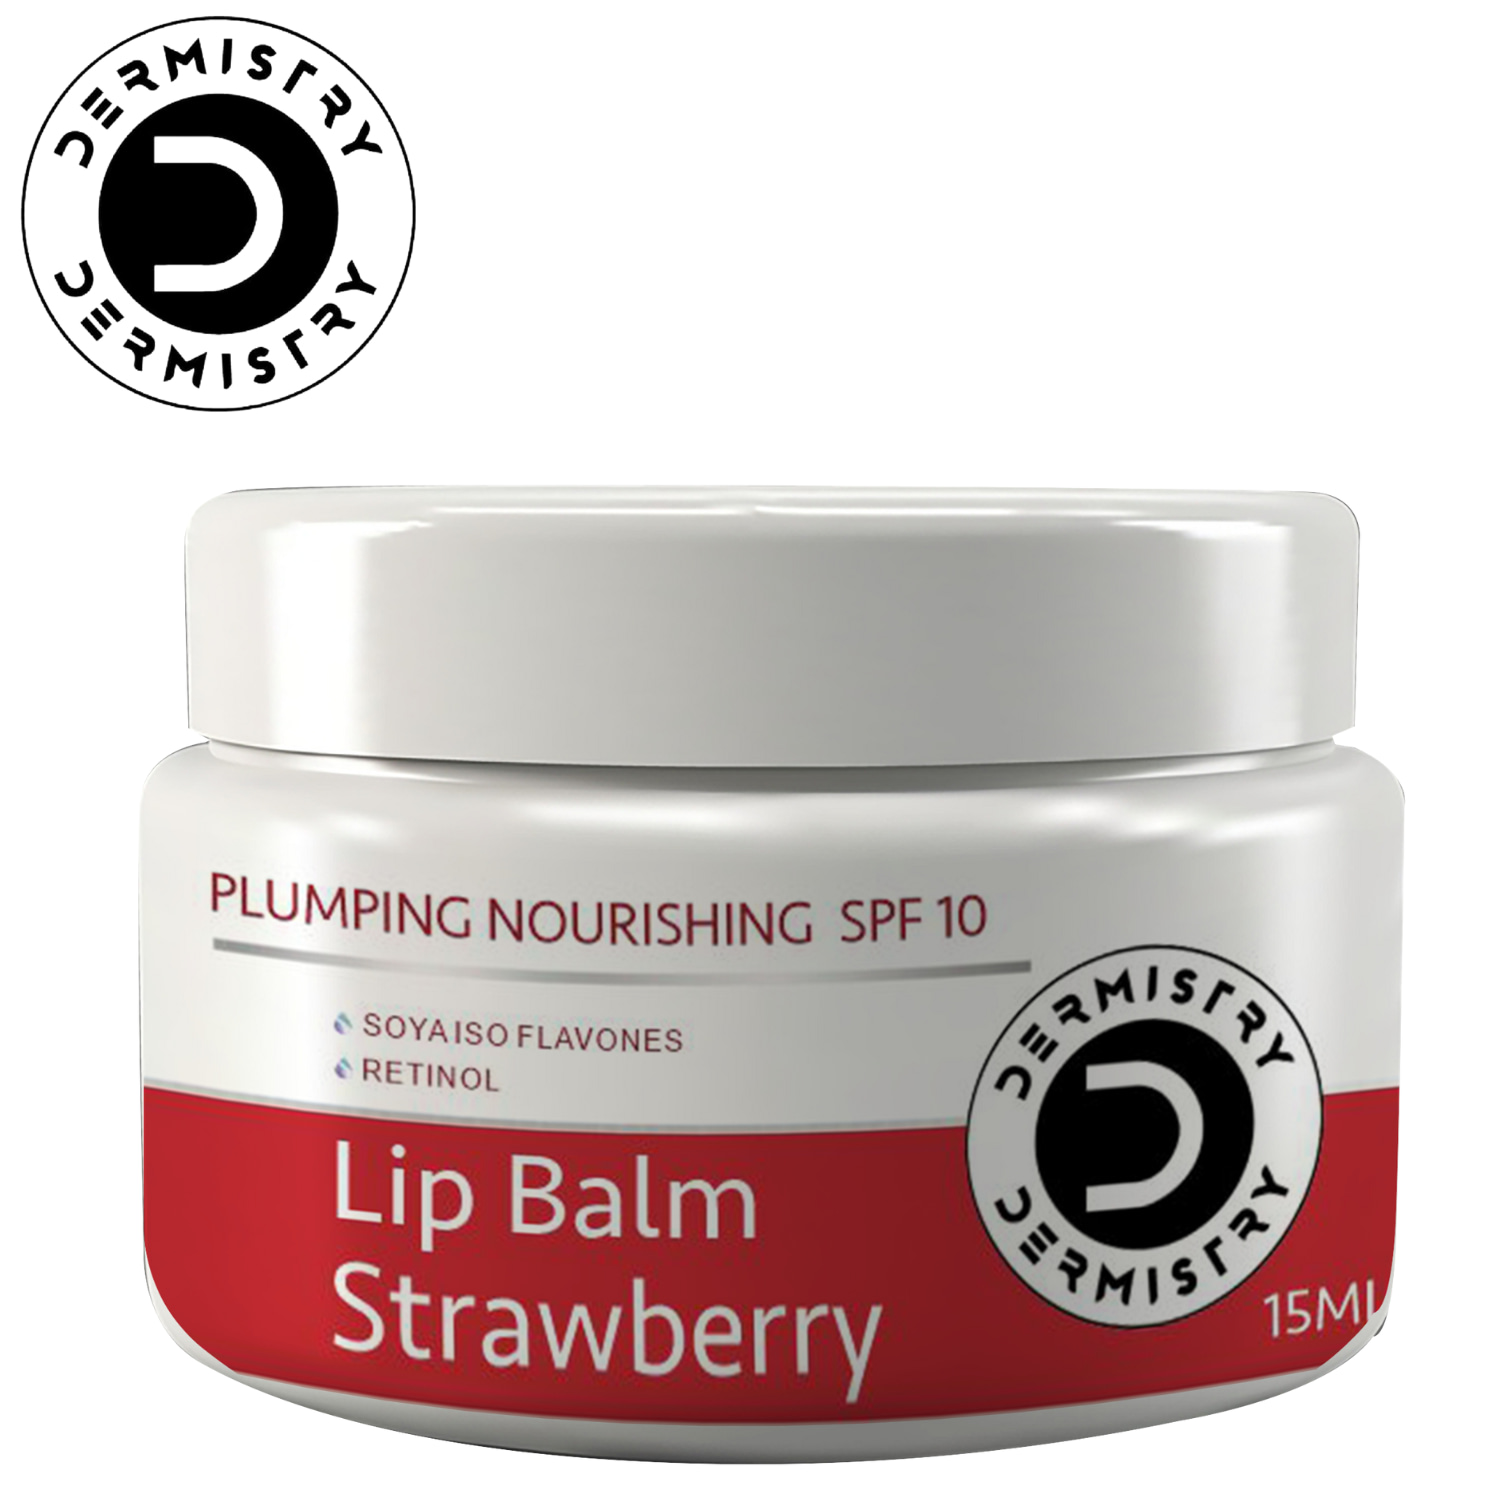 Dermistry Strawberry Lip Care Tint Balm Plumping Nourishing Retinol SPF 10 for Glossy Lips-15ml